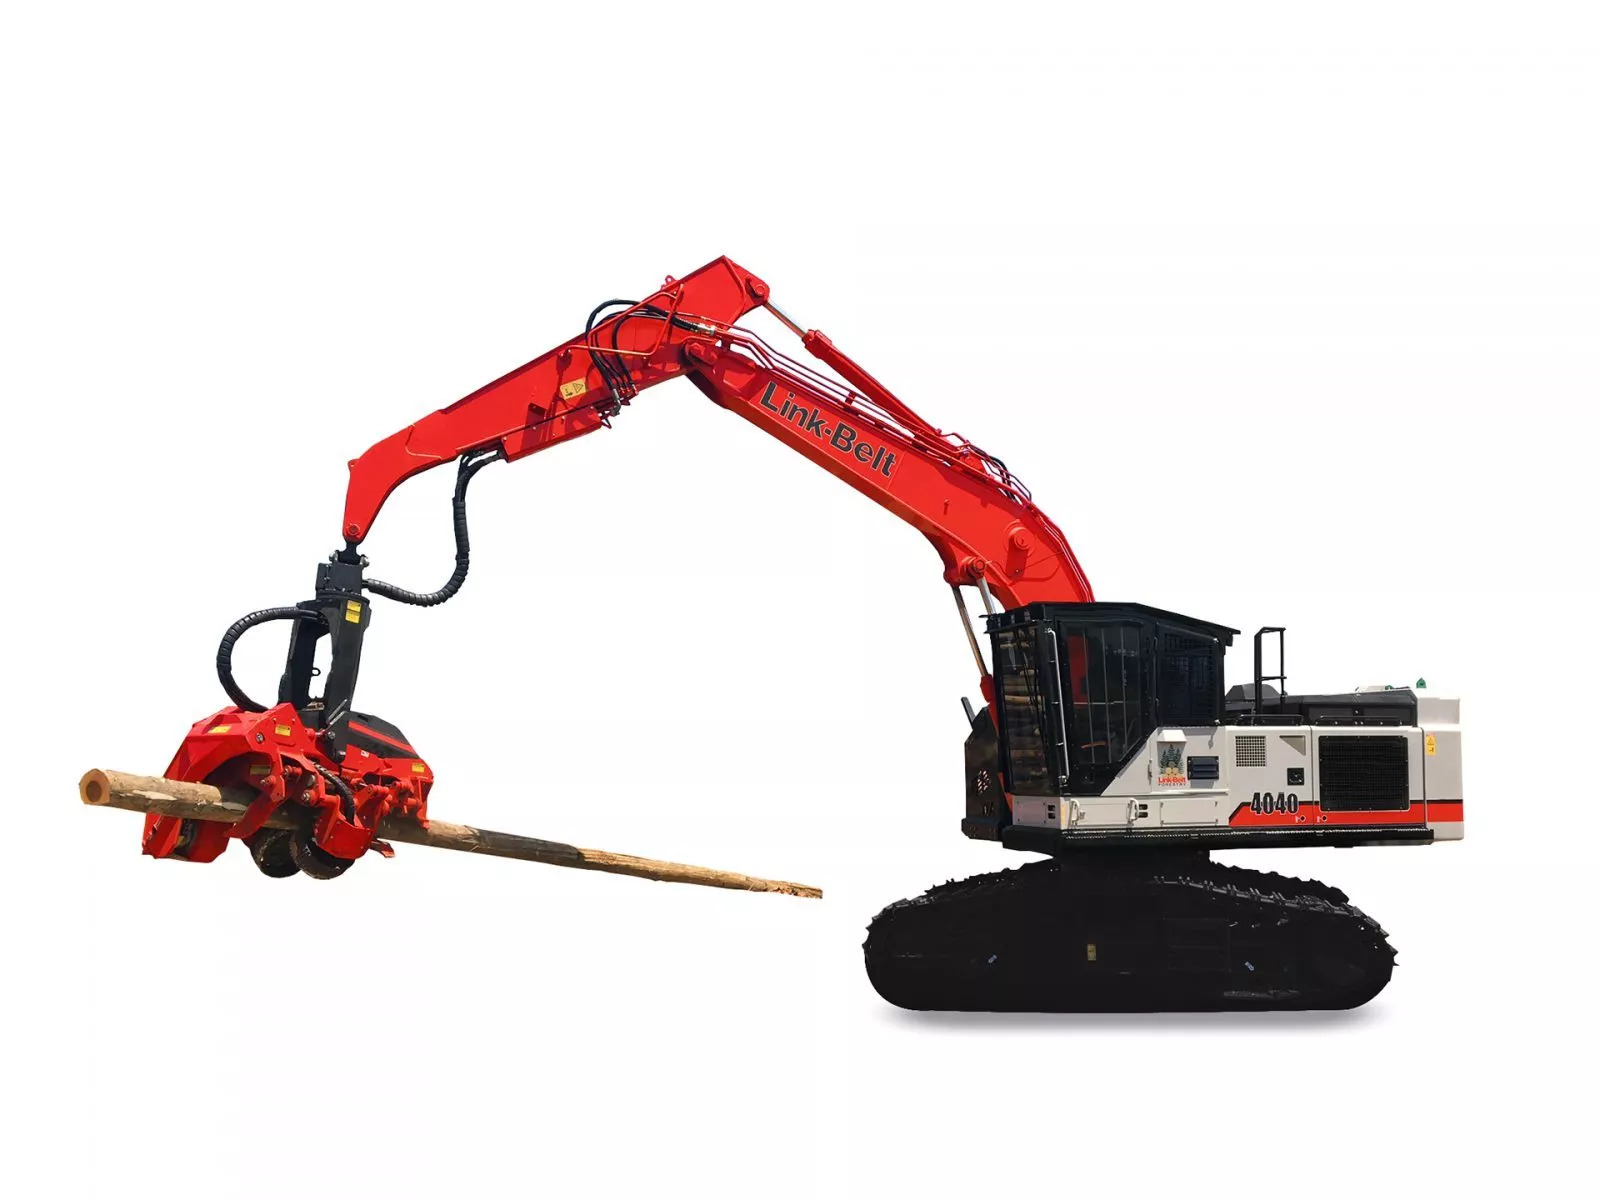 Link-Belt excavator 4040 PH | Product Link-Belt excavator 4040 PH